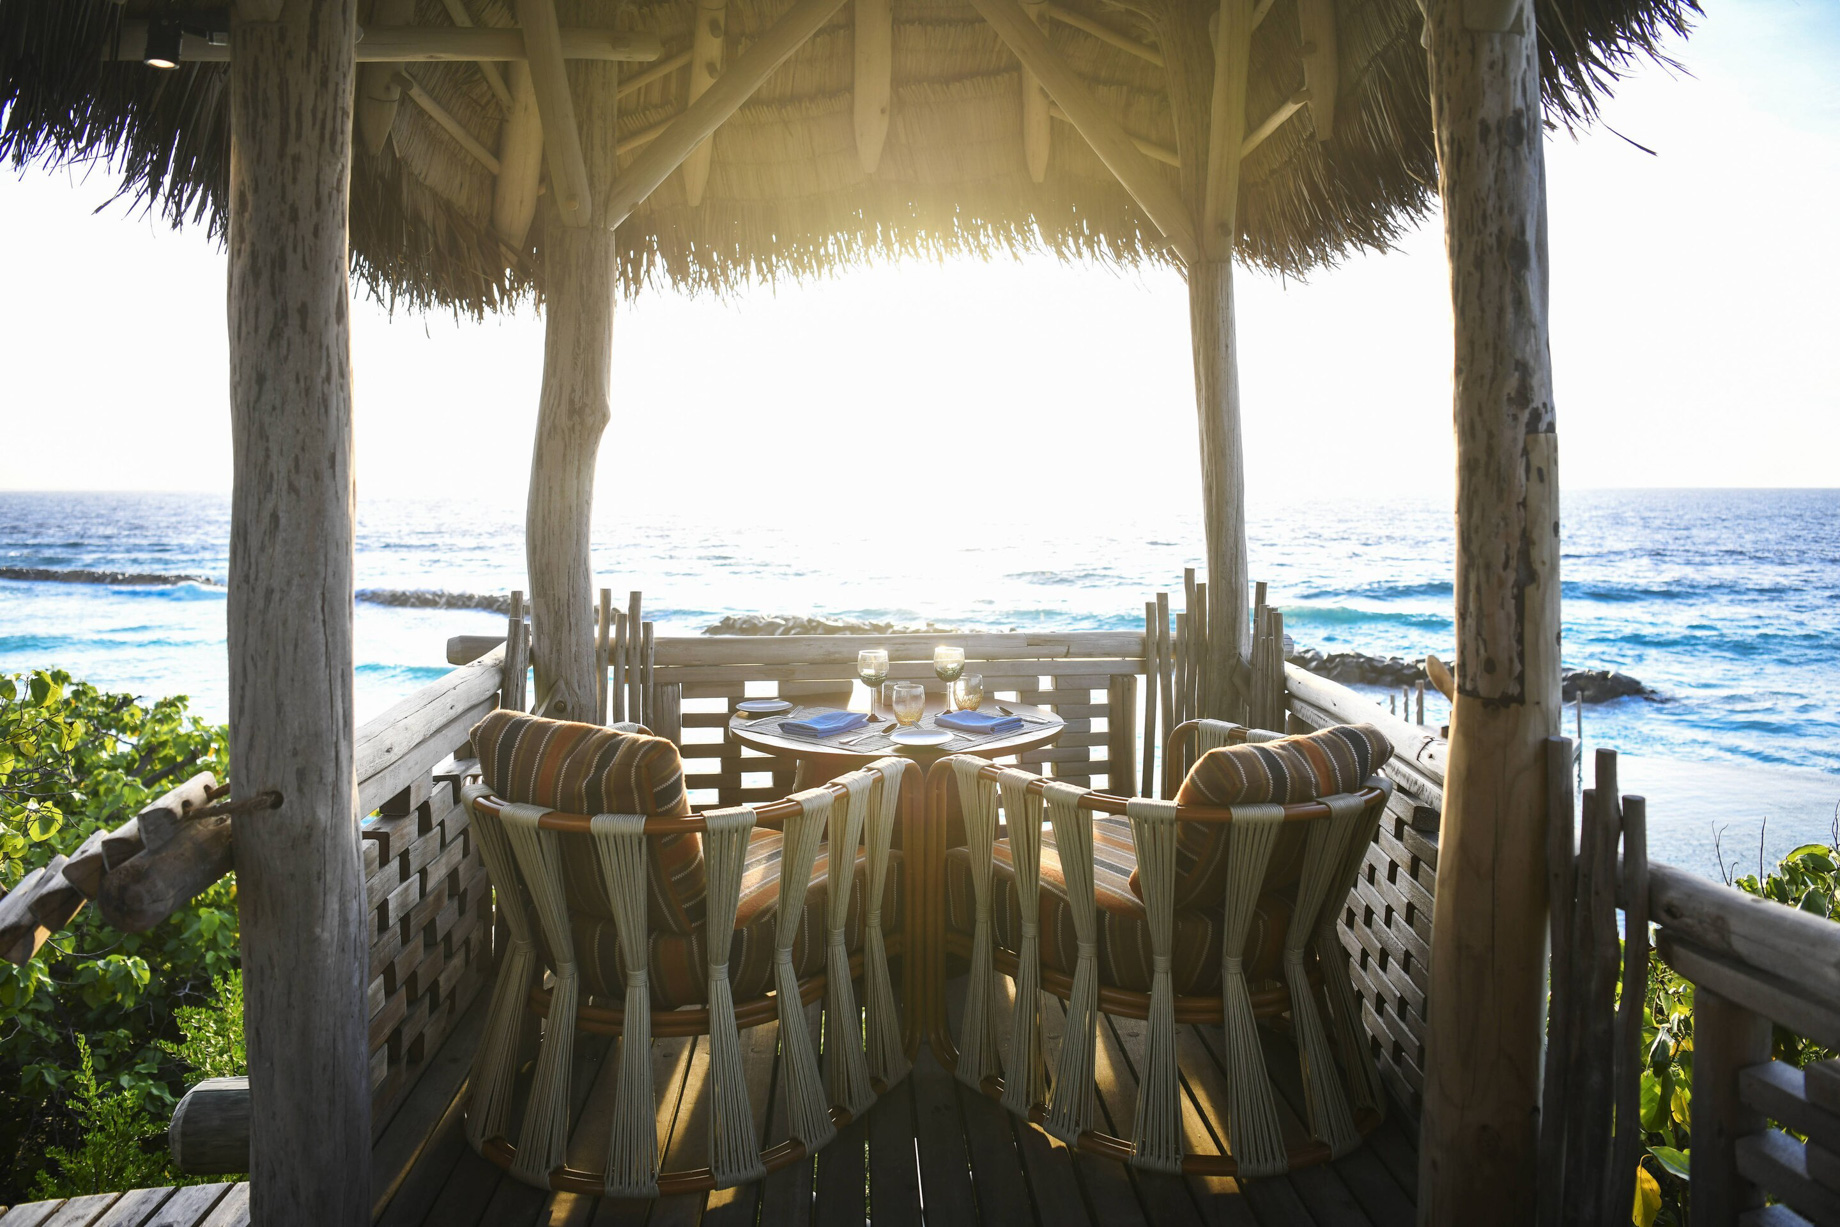 JW Marriott Maldives Resort & Spa - Shaviyani Atoll, Maldives - Kaashi Private Ocean View Seating